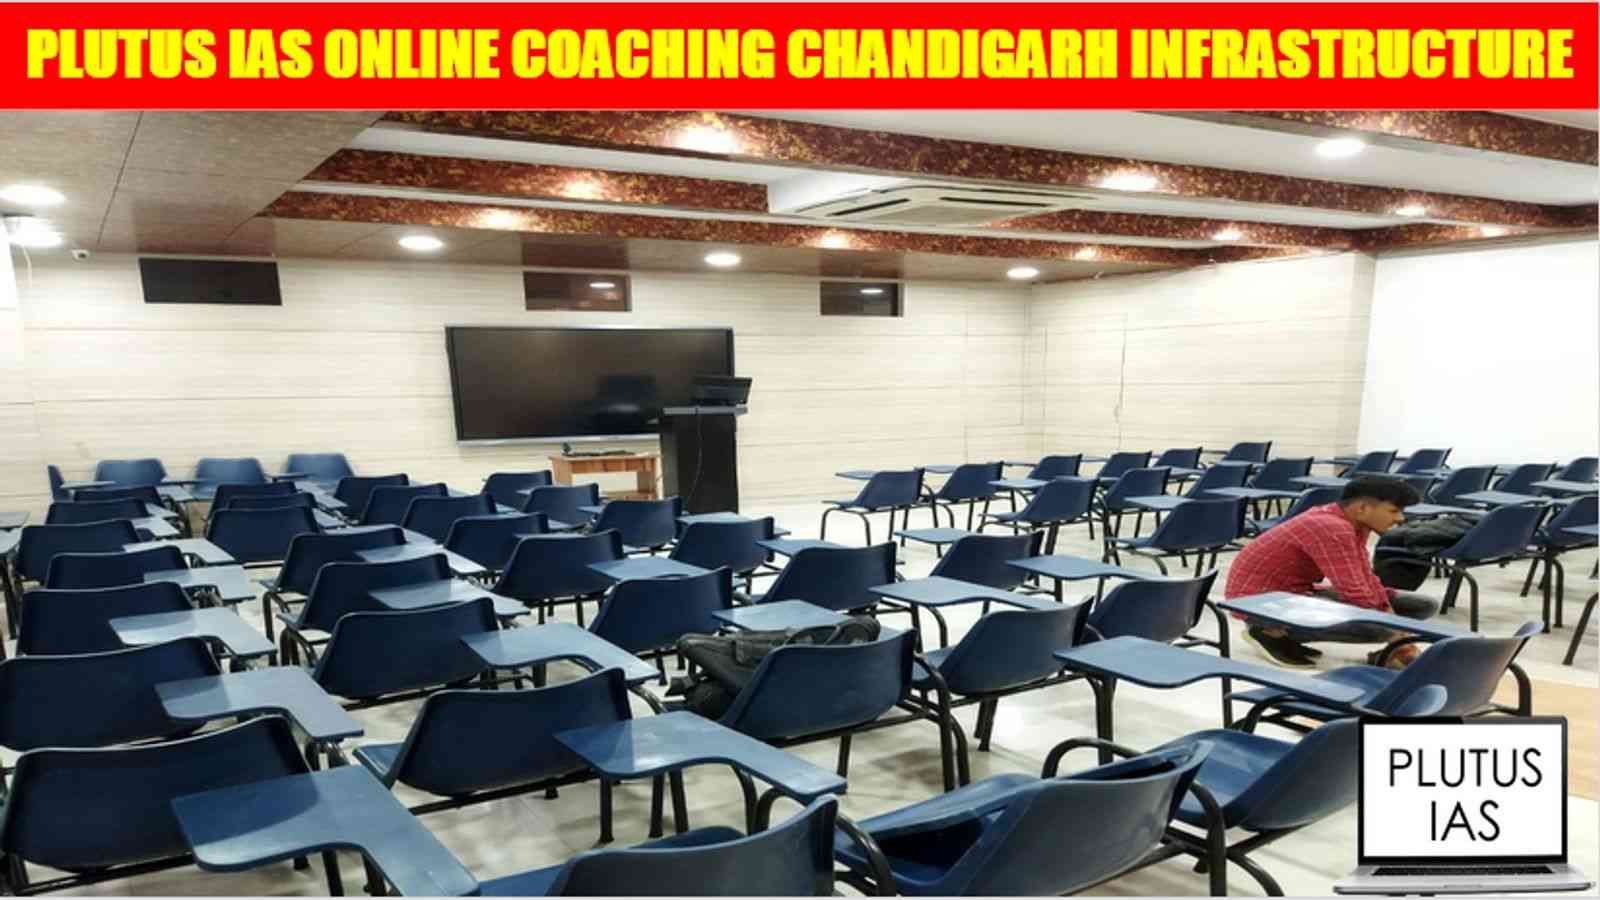 Plutus IAS Online Coaching Chandigarh Infrastructure